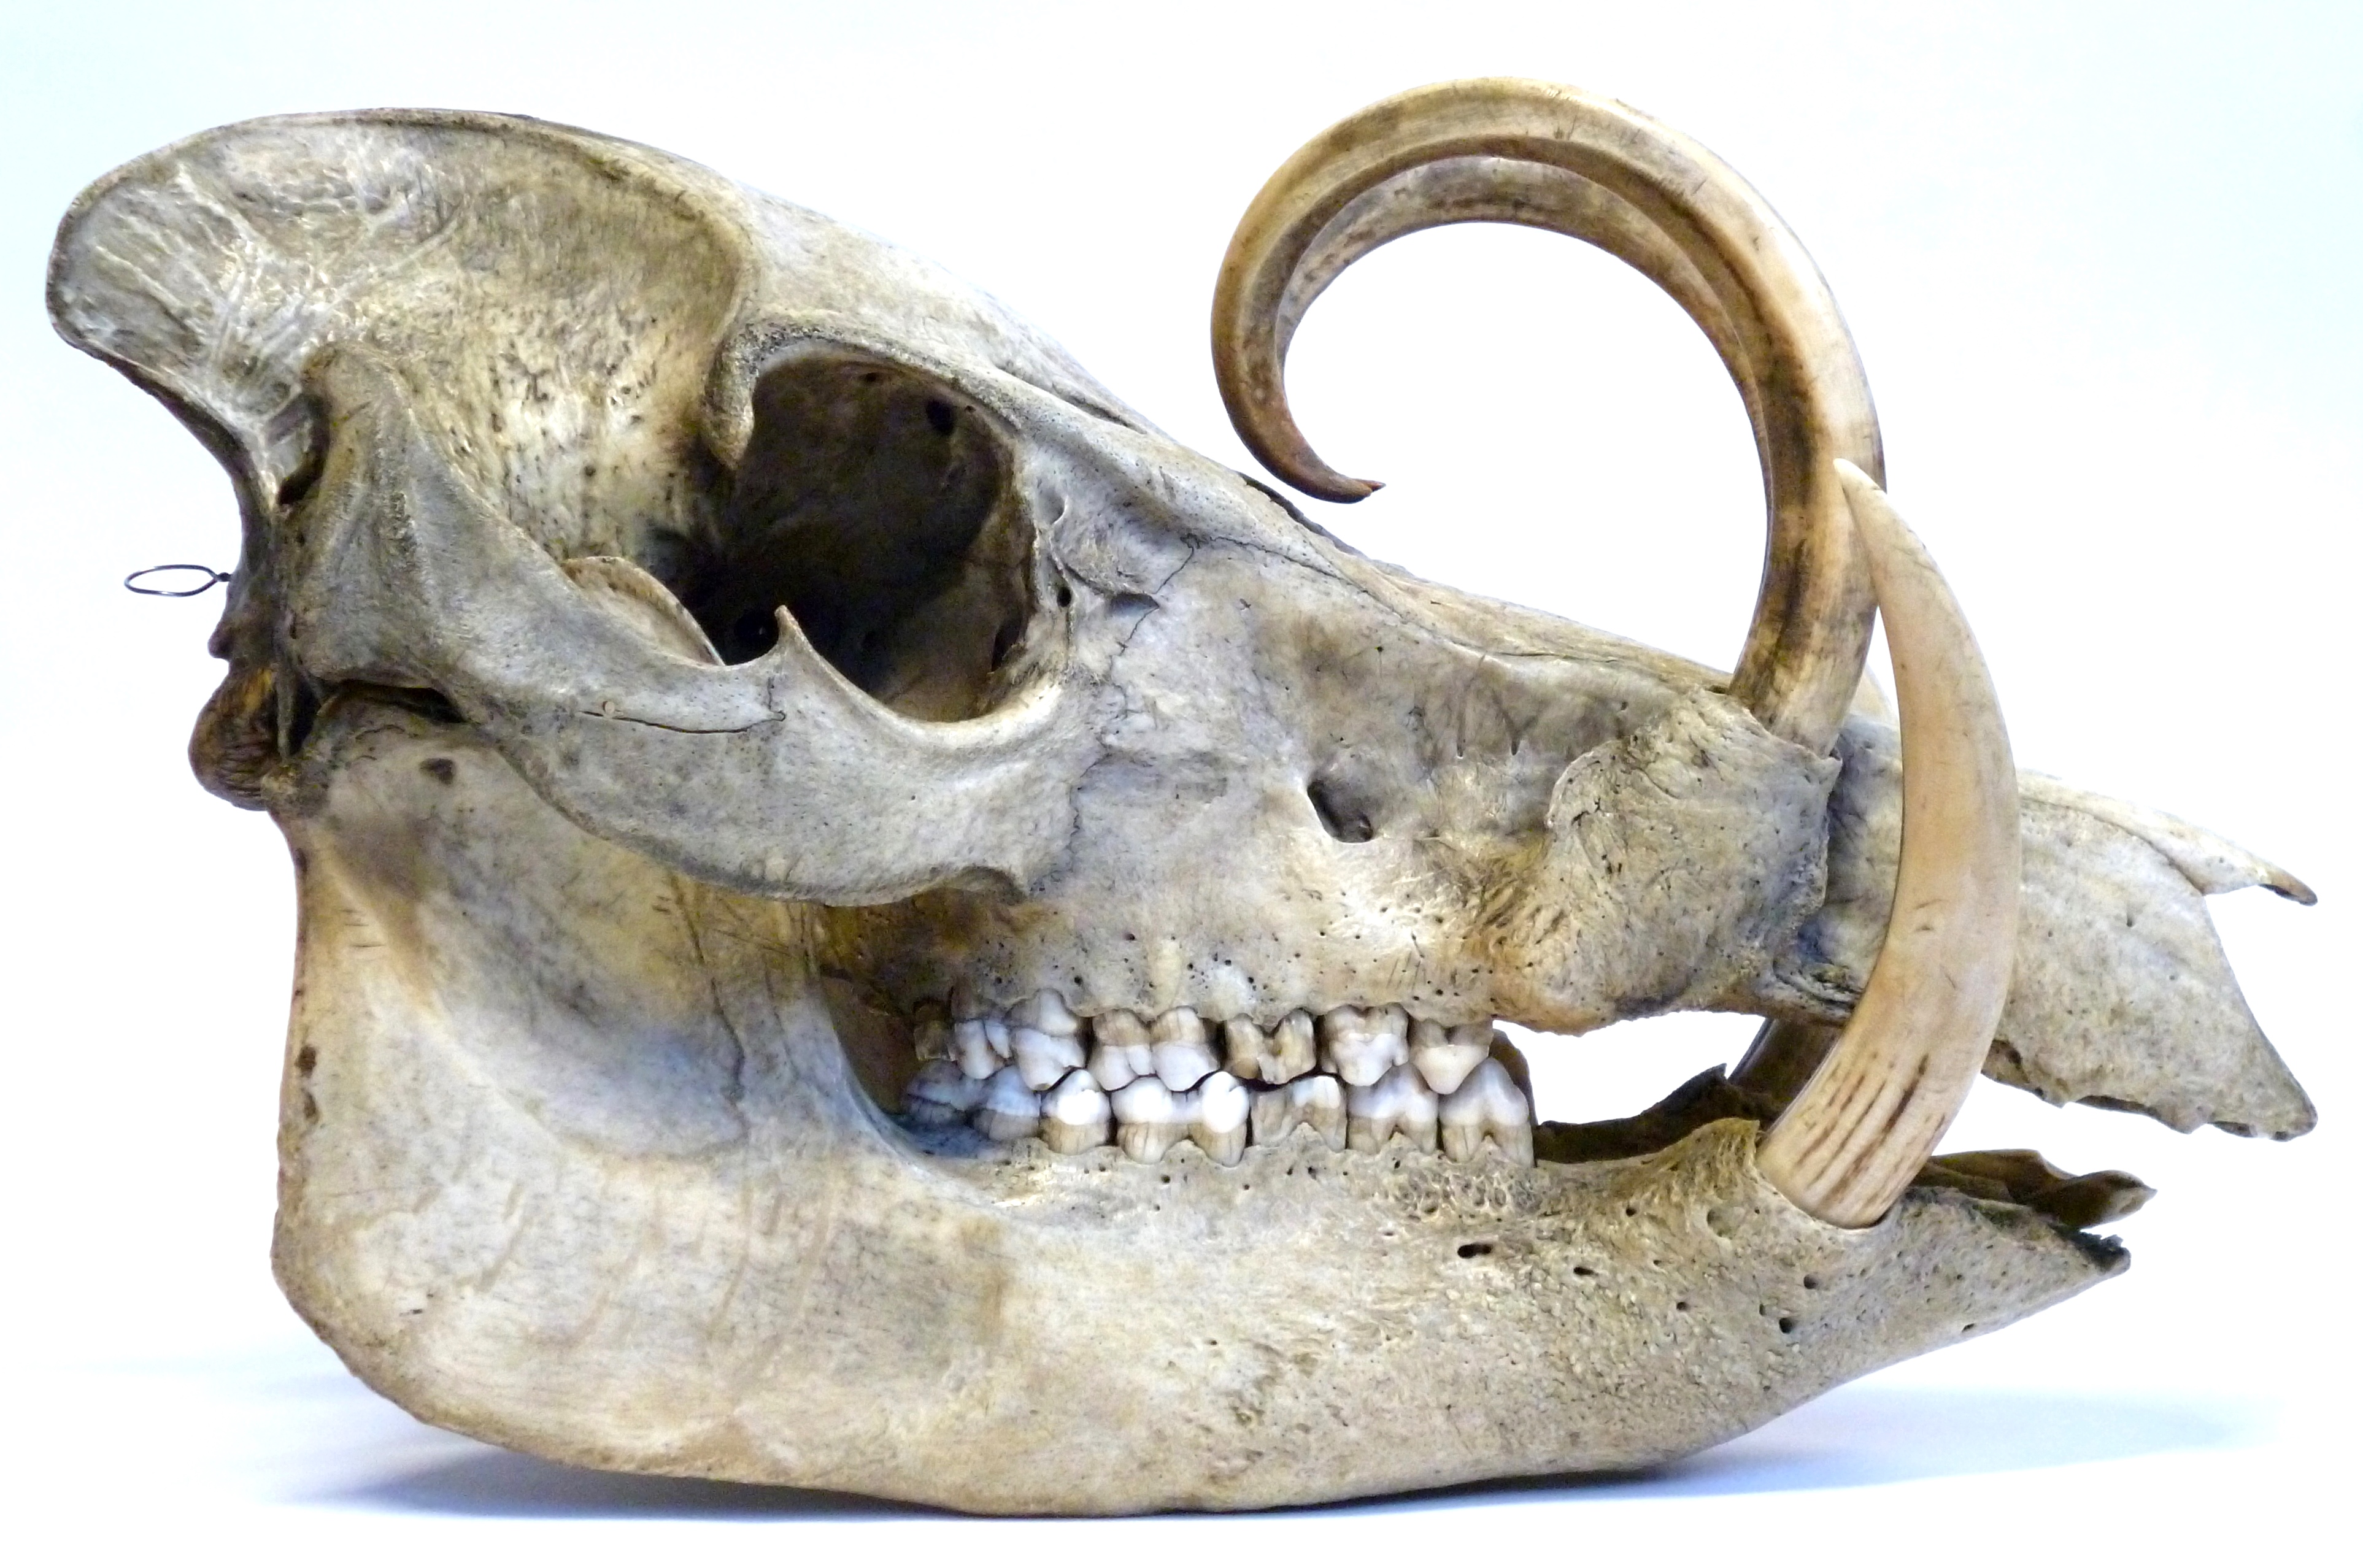 LDUCZ-Z111 Babyrousa babyrussa skull